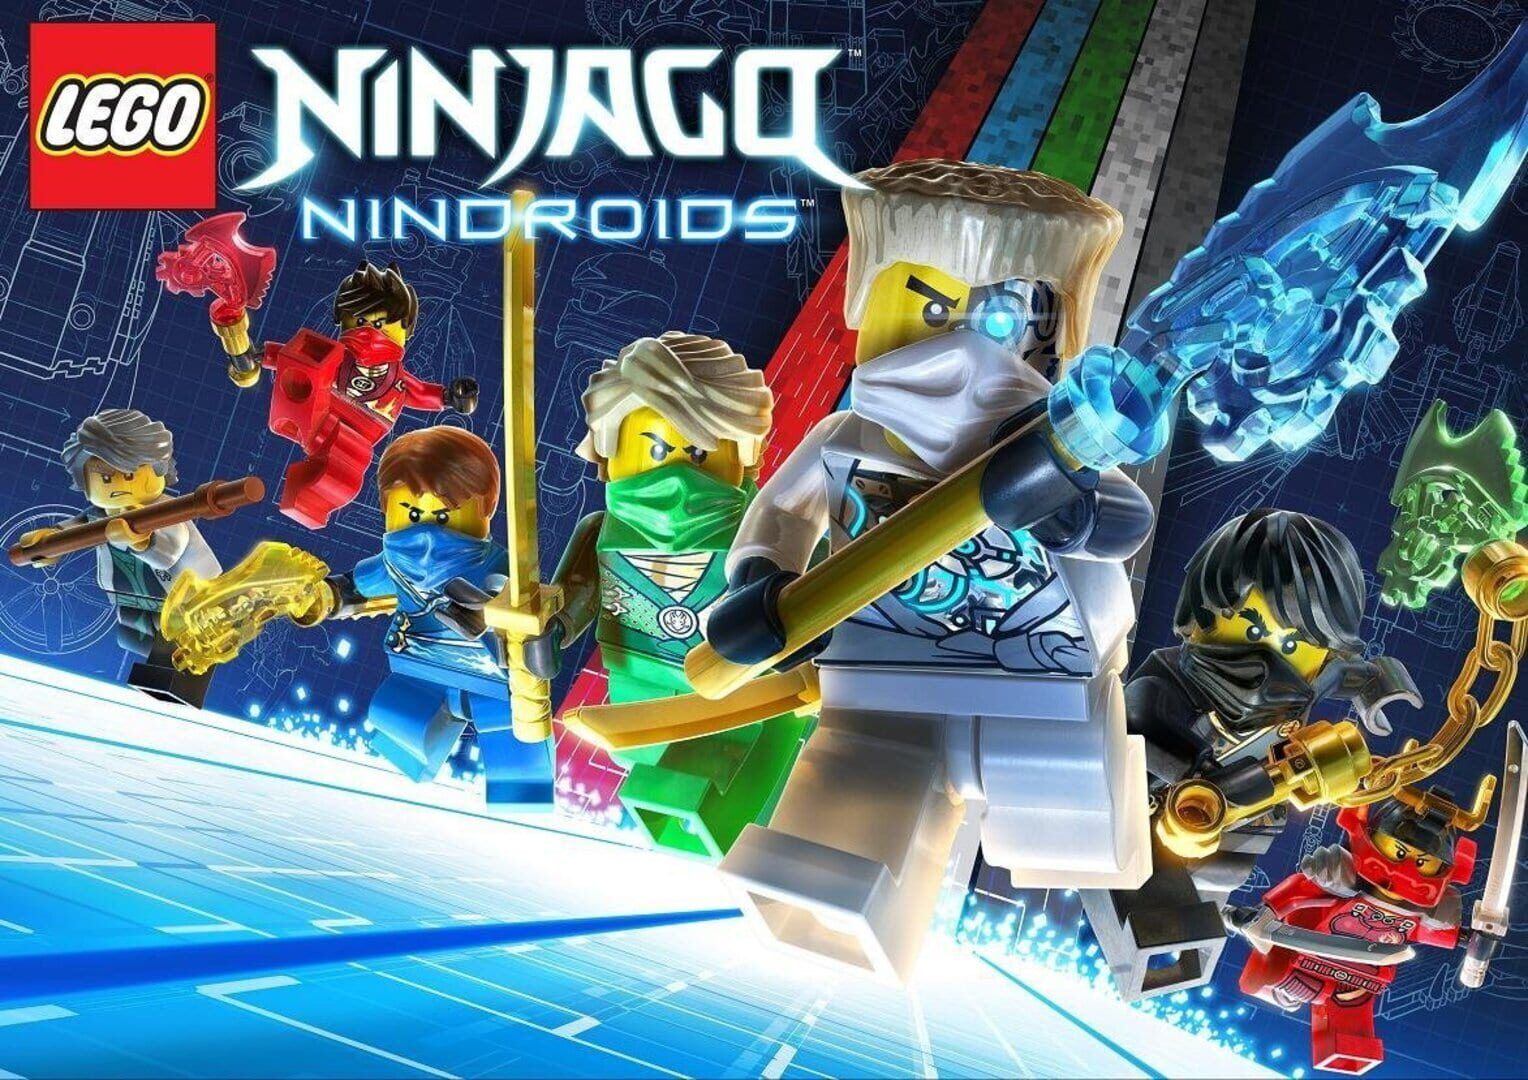 Arte - LEGO Ninjago: Nindroids